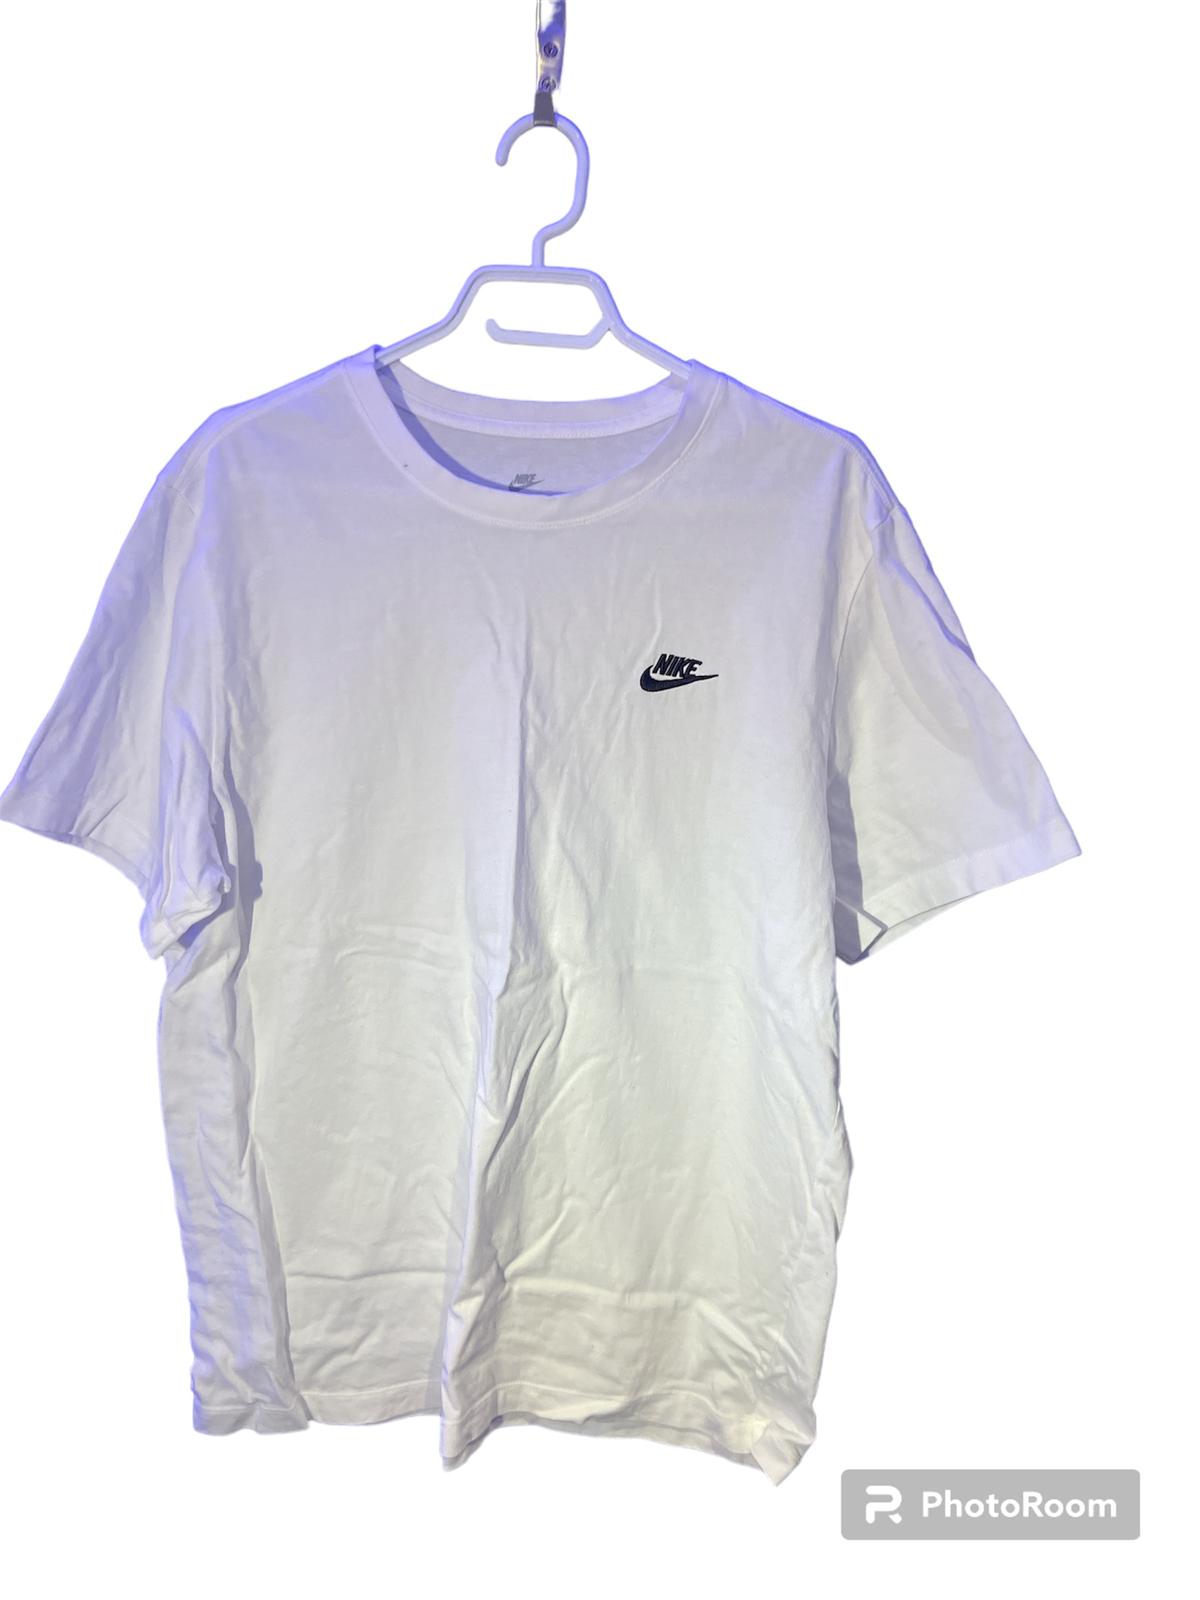 Photo of Nike t-shirt